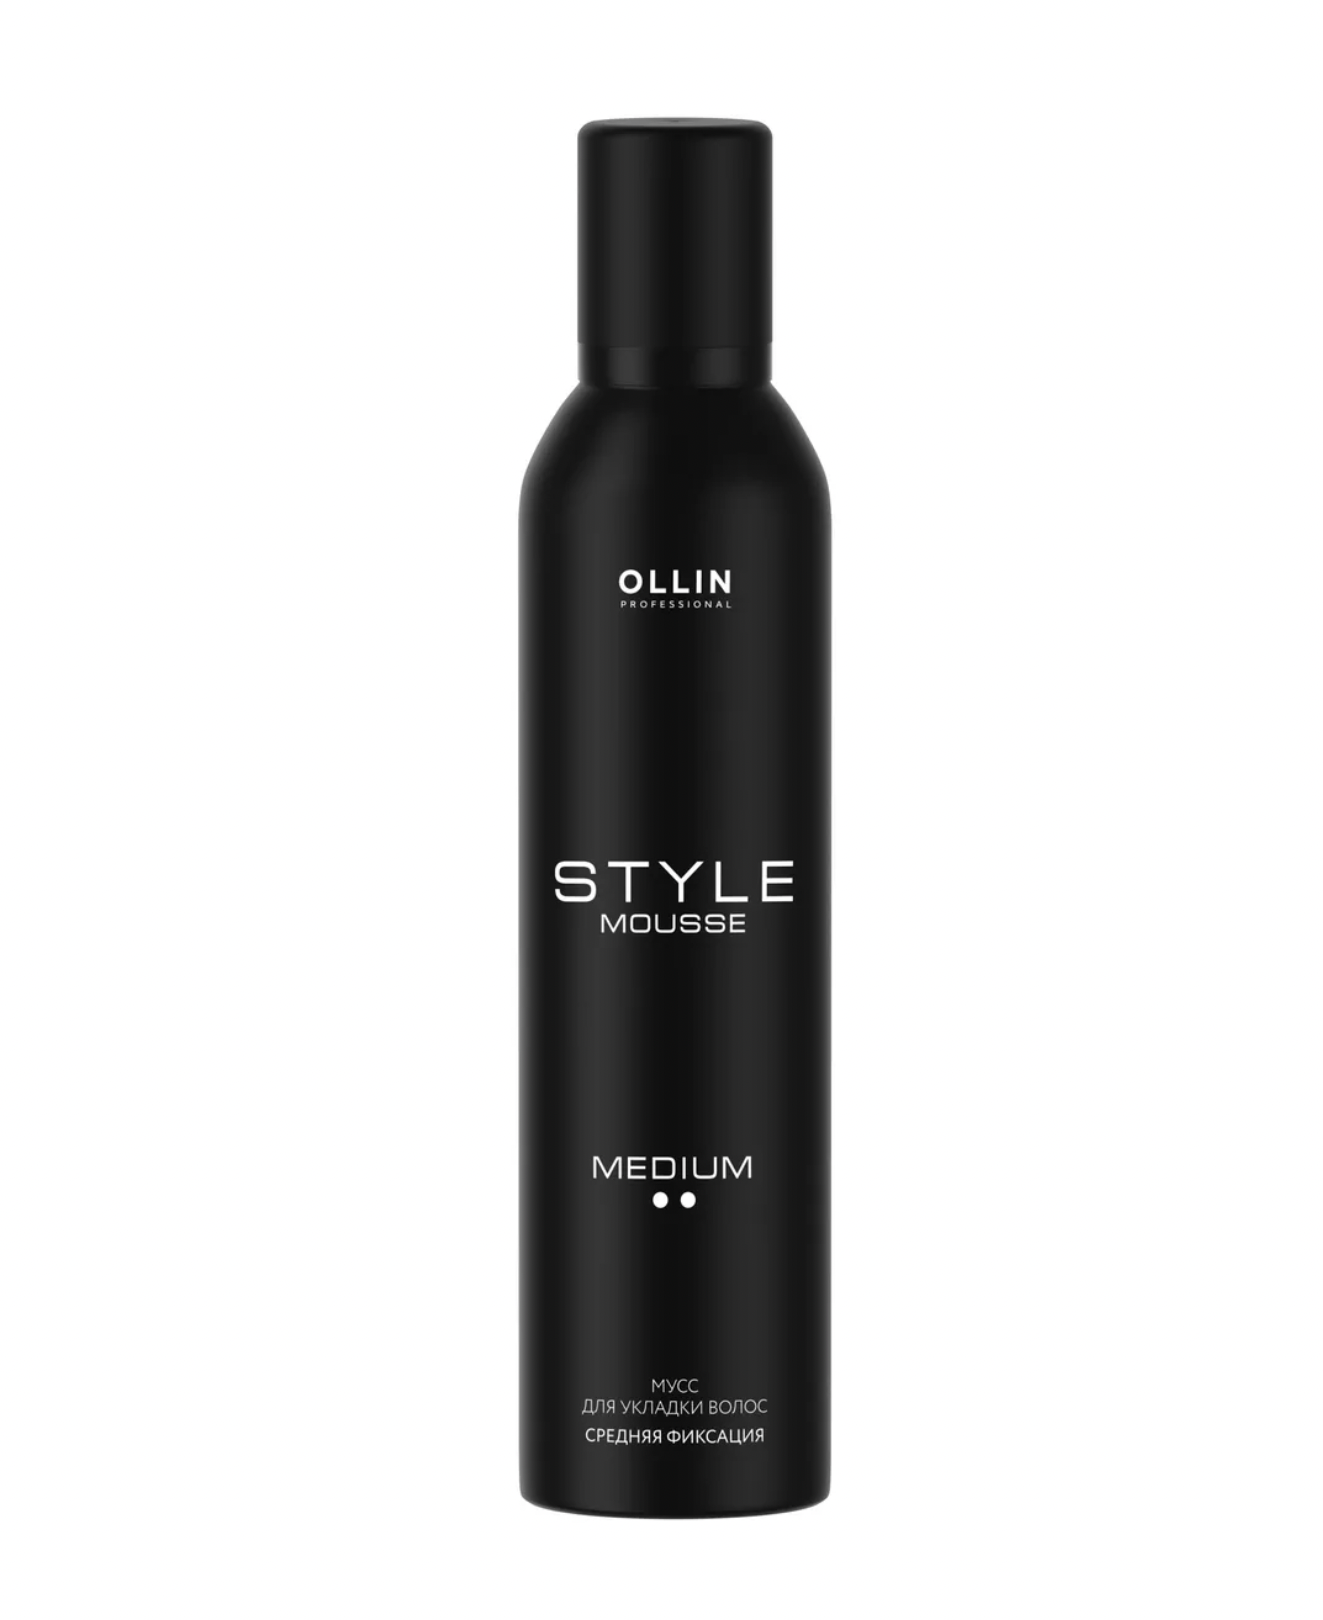 Оллин / Ollin Professional - Мусс для укладки волос Style средняя фиксация 250 мл